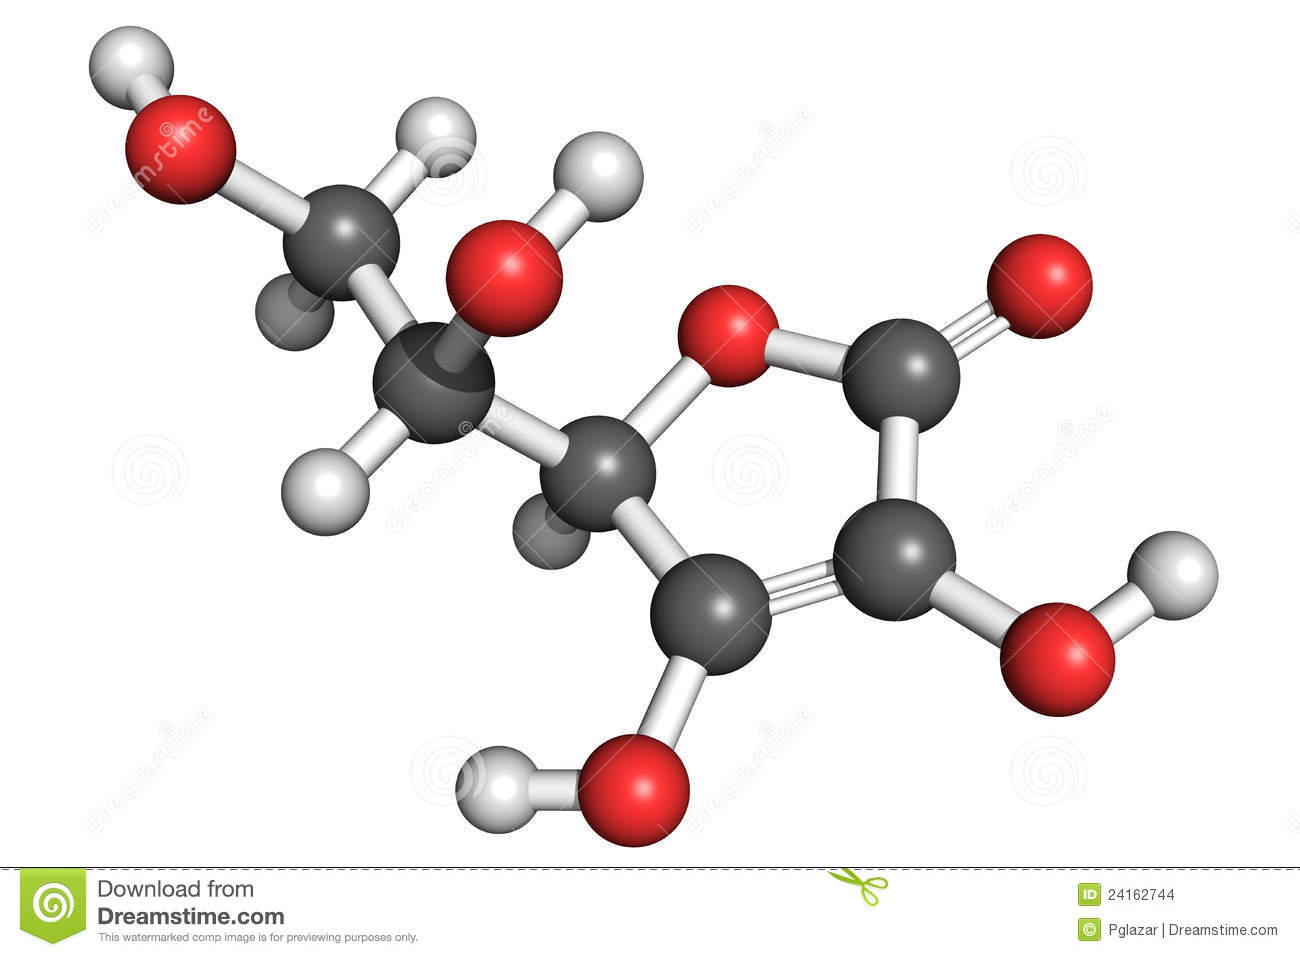 Ball And Stick Model Of L Ascorbic Acid  Vitamin C   Atoms Are